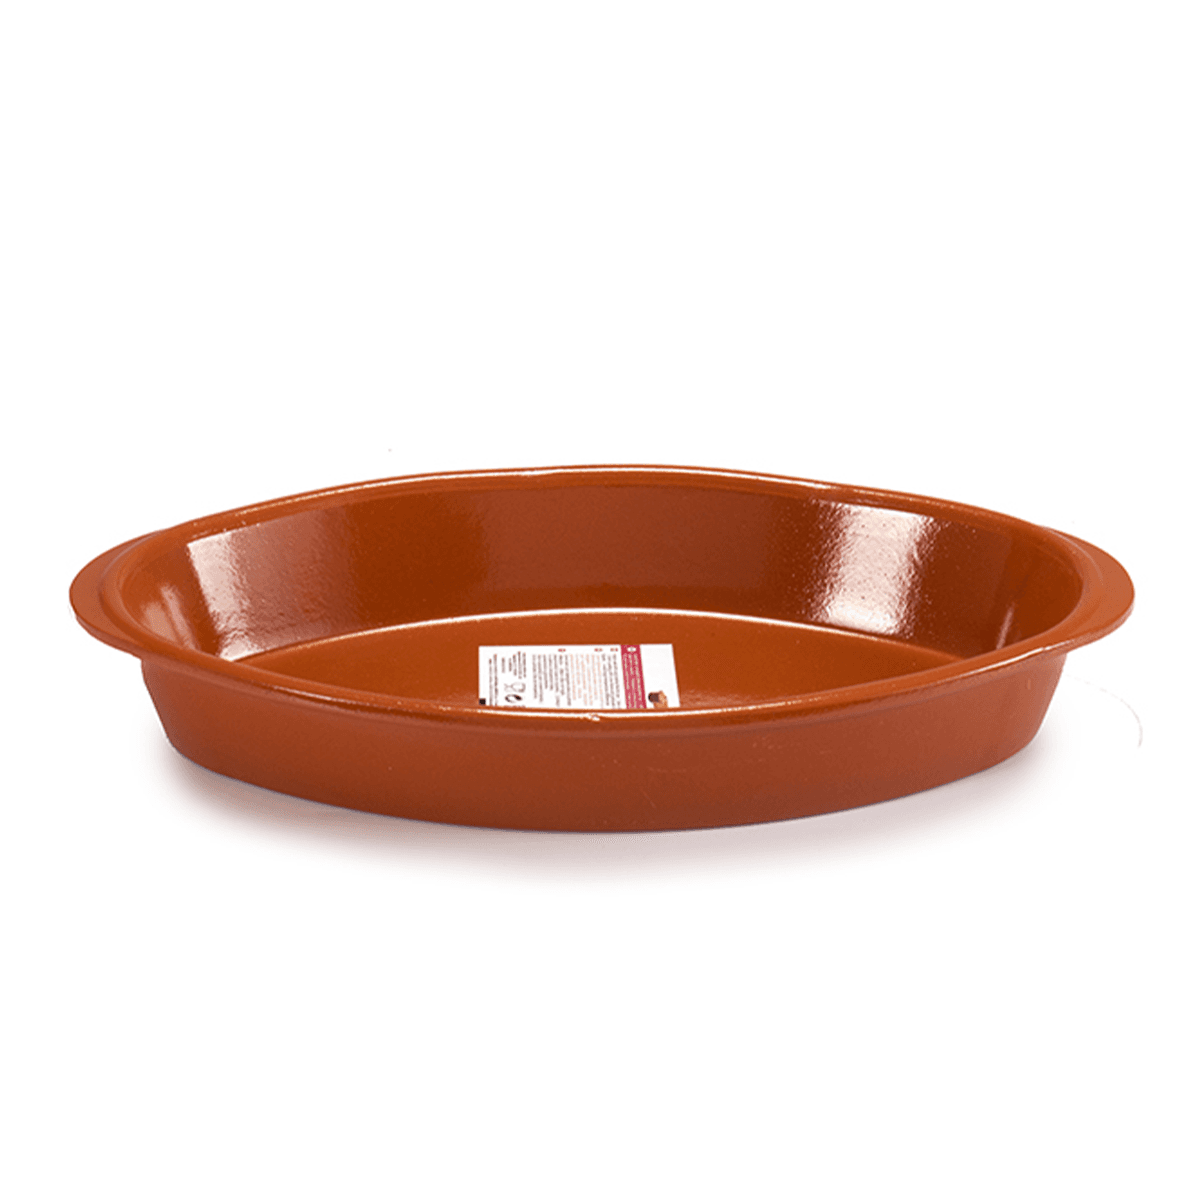 صحن فخار بيضاوي عميق لون بني 37 سم من آرت ريجال صناعة اسبانيا Arte Regal Brown Clay Deep Oval Plate